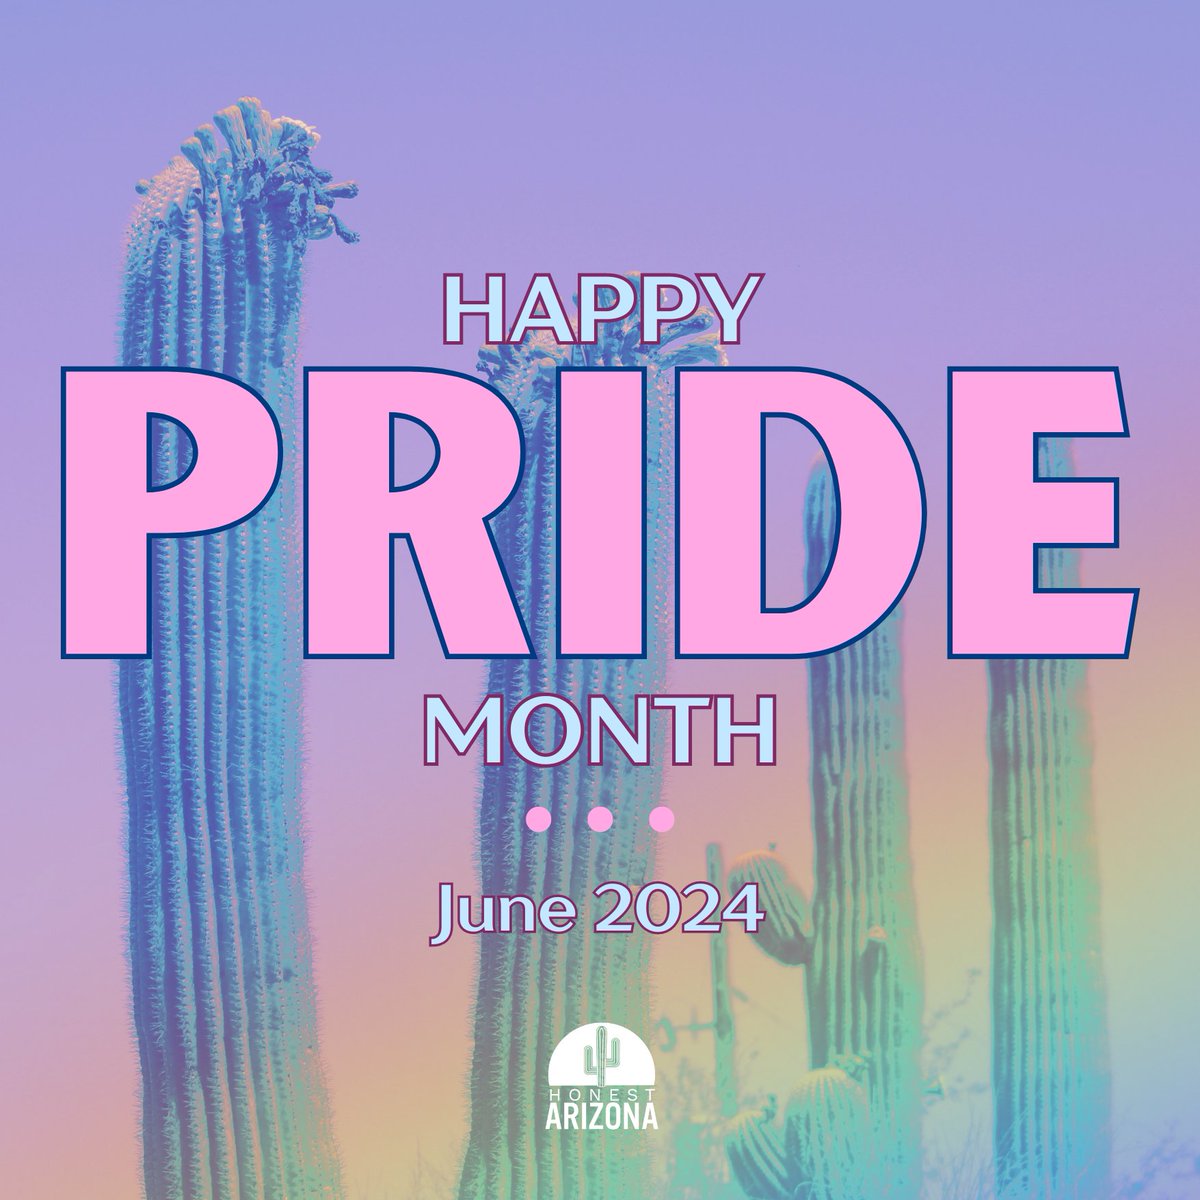 🏳️‍🌈🏳️‍⚧️ Happy Pride Month from Honest Arizona! 🏳️‍🌈🏳️‍⚧️